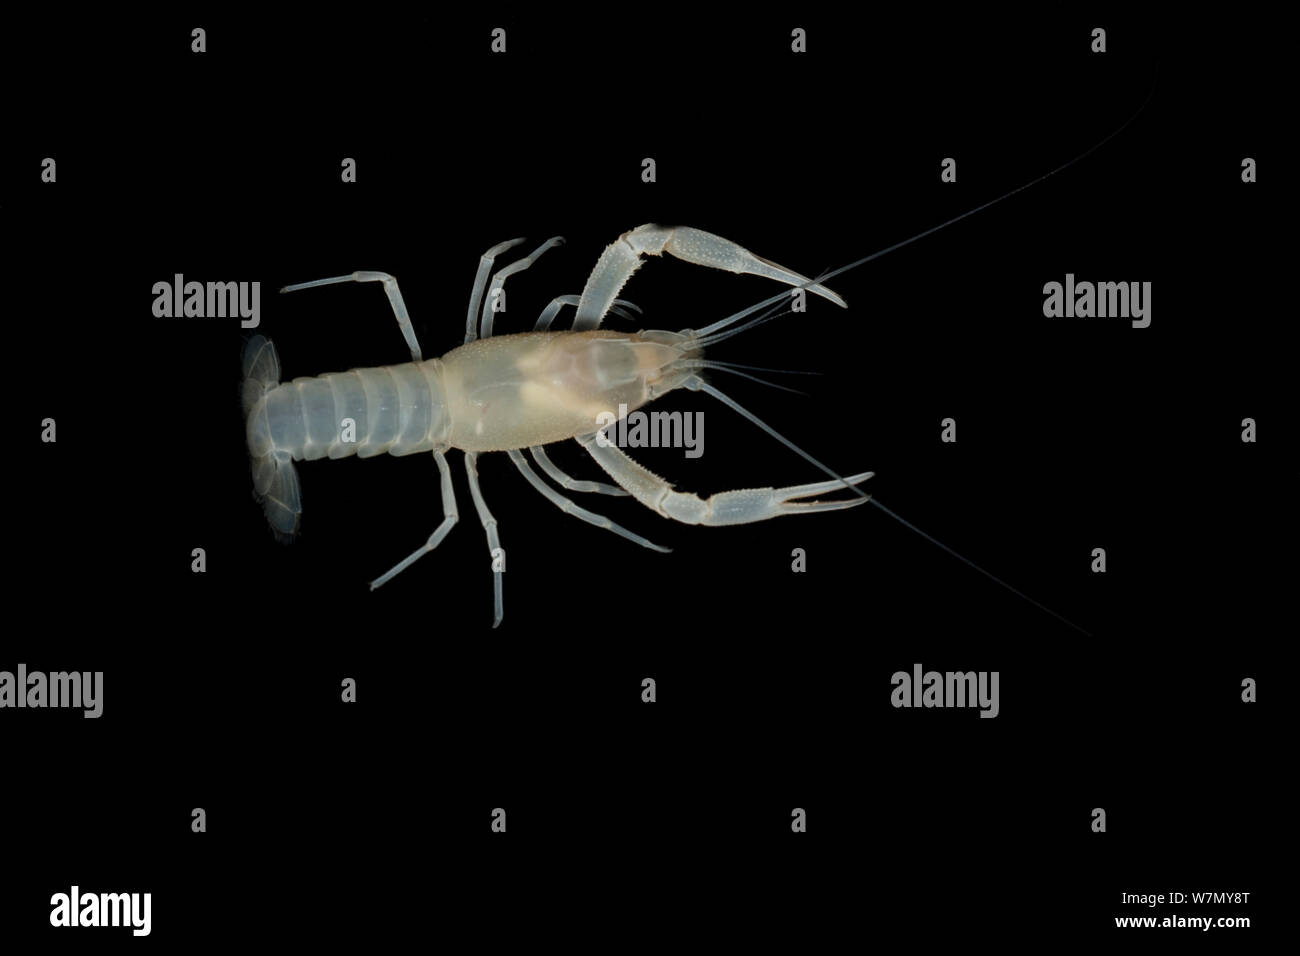 Orange Lake / Blind cave crayfish (Procambarus franzi) Alachua Co, Florida, USA. Controlled conditions Stock Photo